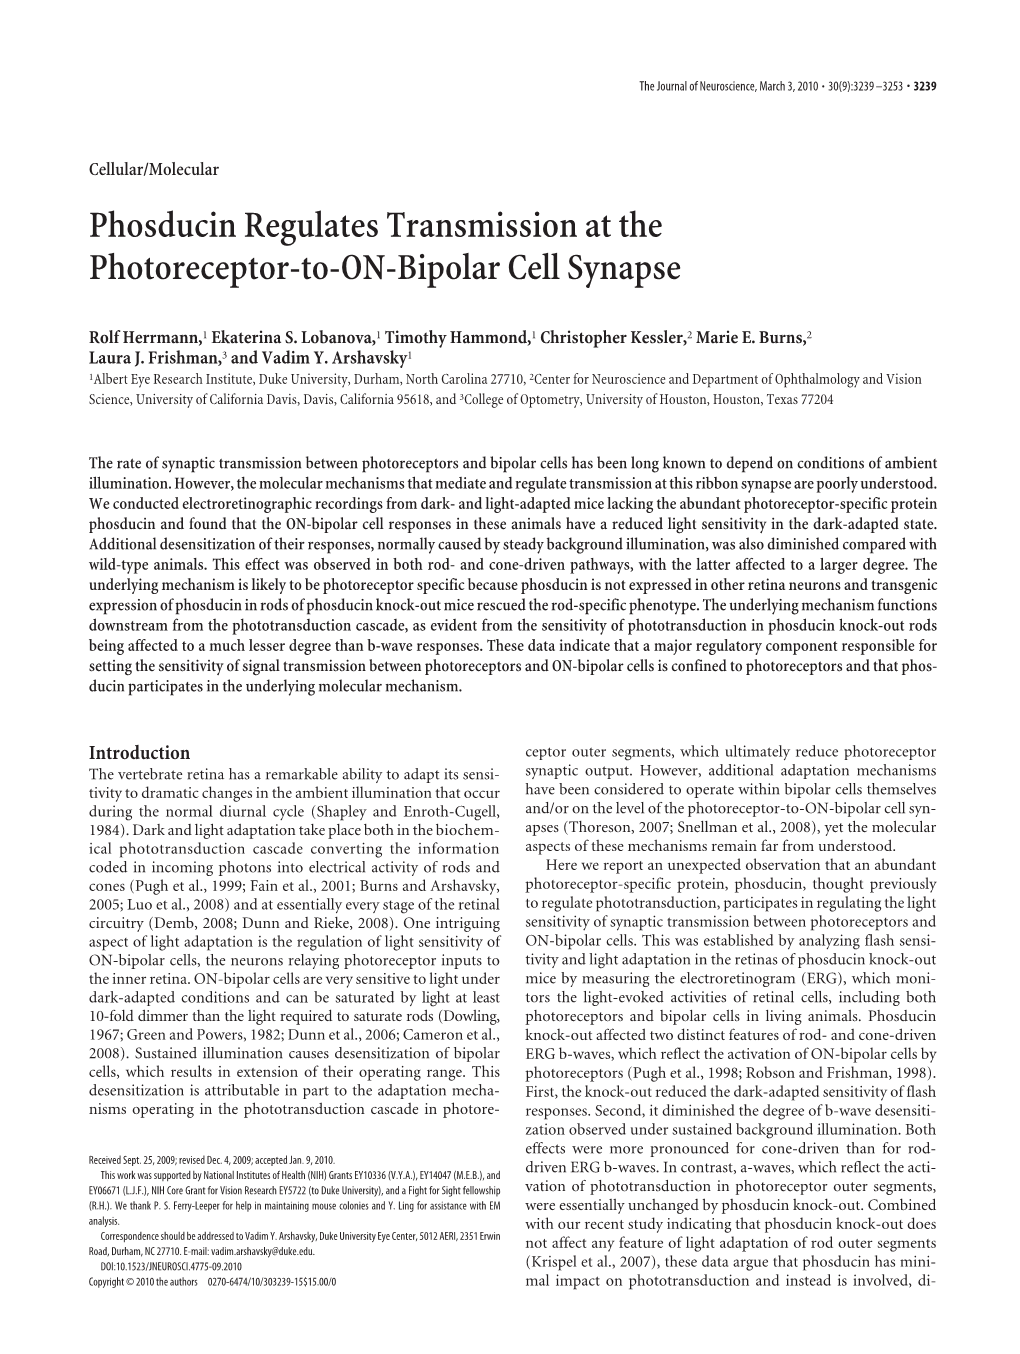 Phosducin Regulates Transmission at the Photoreceptor-To-ON-Bipolar Cell Synapse